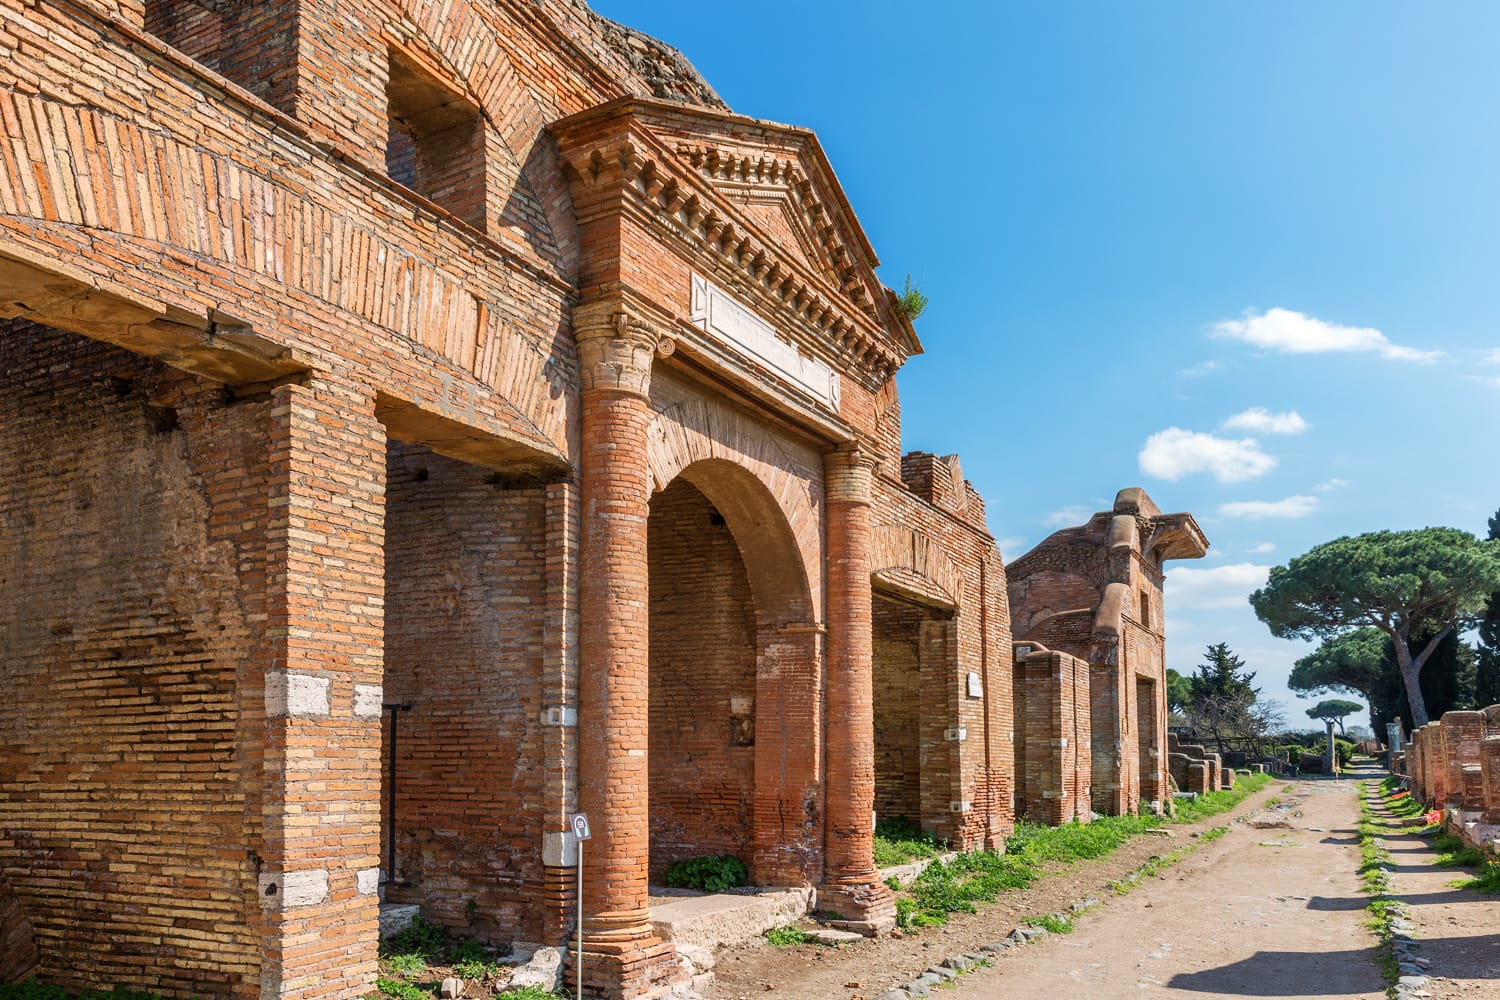 Roman ancient ruins in Ostia Antica, near Rome, Italy